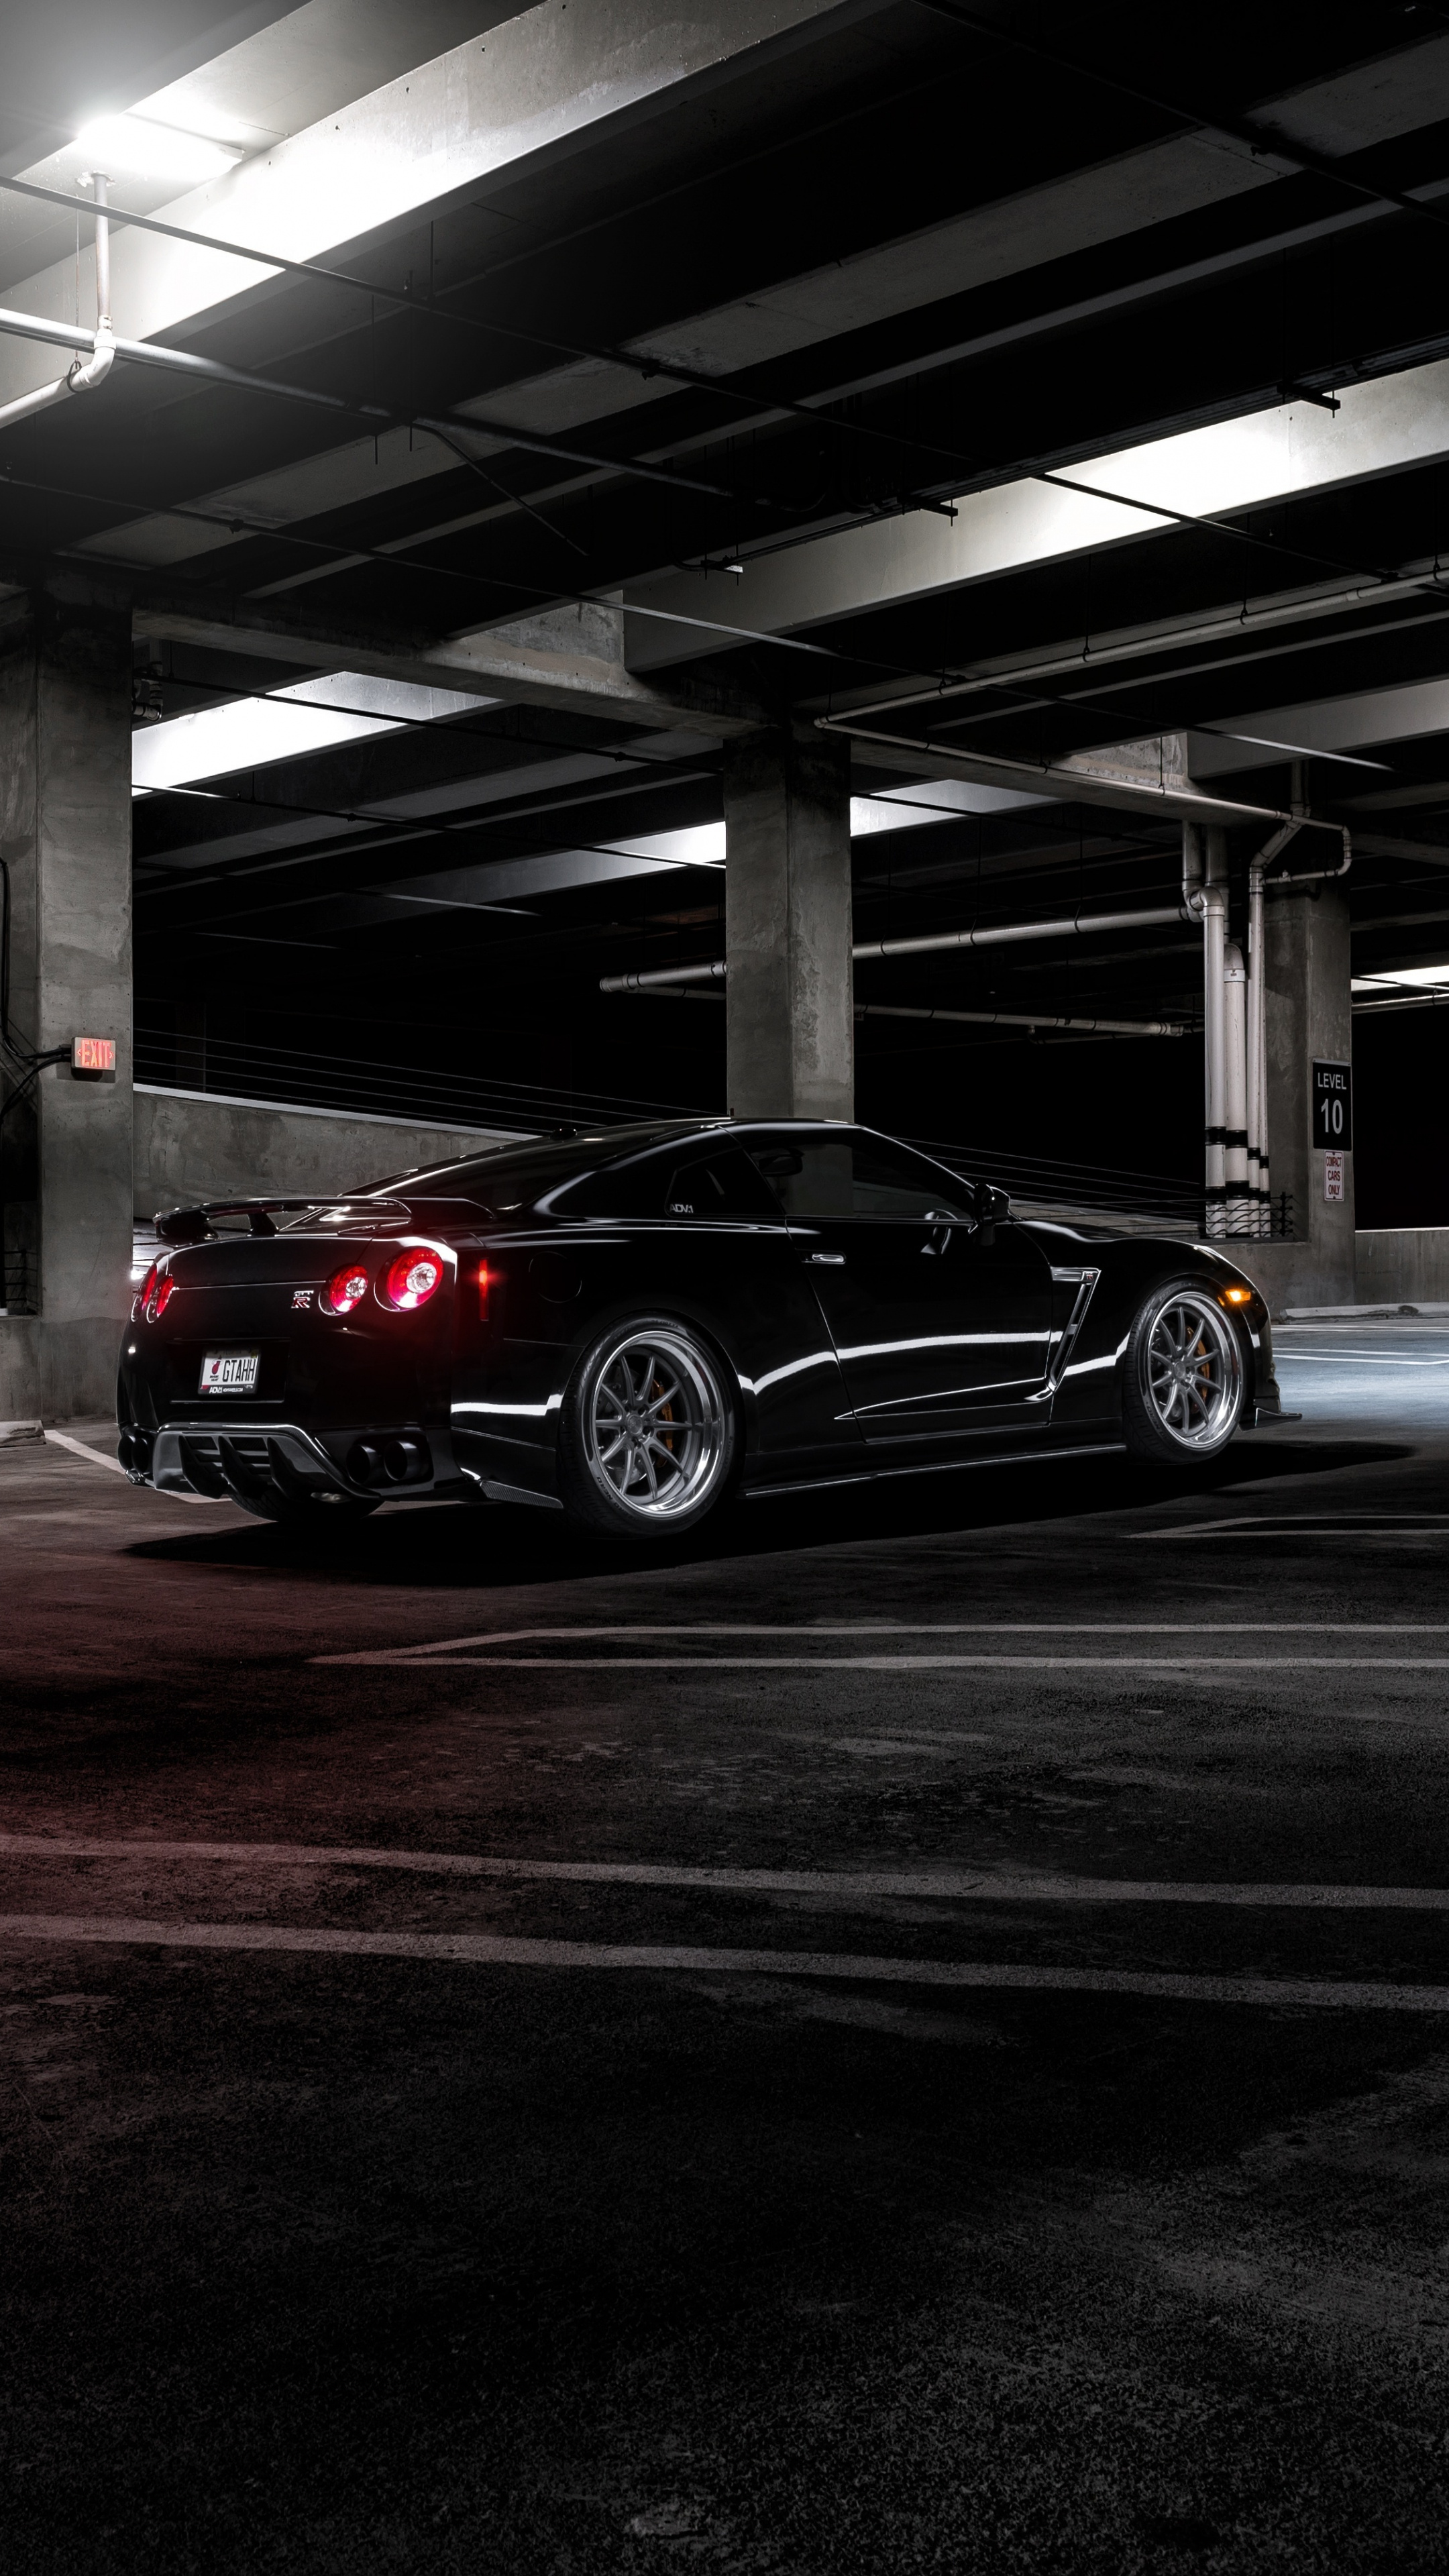 GT-R, Download black car Nissan GT-R wallpaper, Xperia Z5 Premium, 4K image, 2160x3840 4K Phone